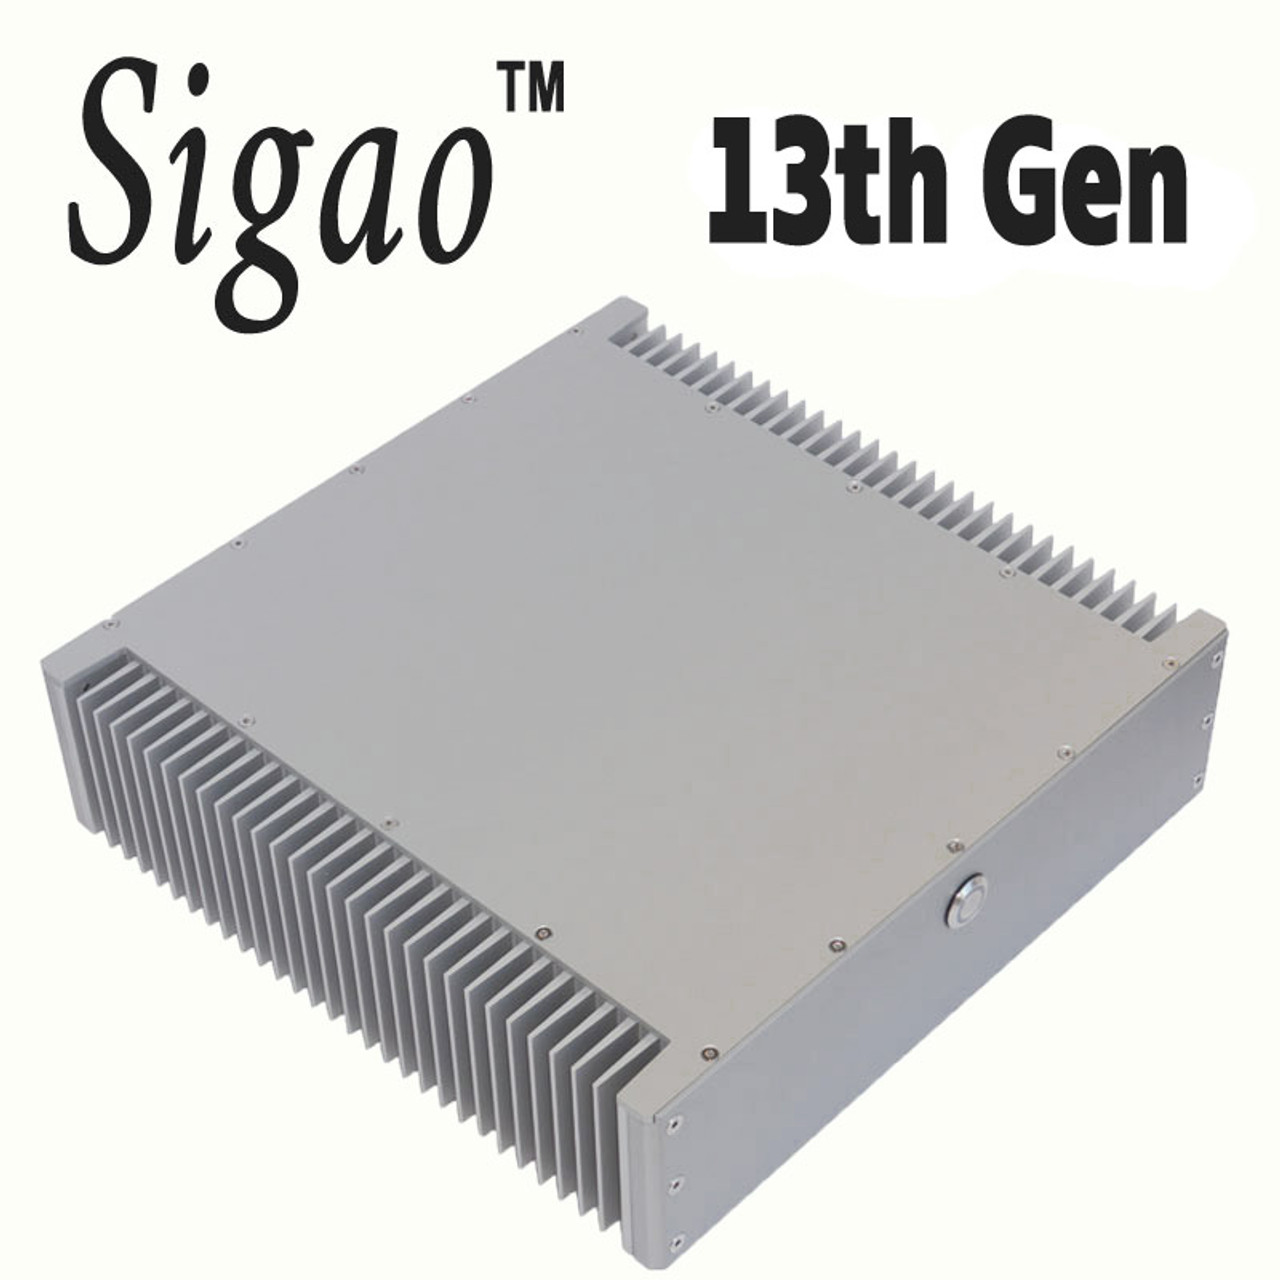 Sigao Model B, fanless 13th Gen i9 13900T PC with NVIDIA fanless